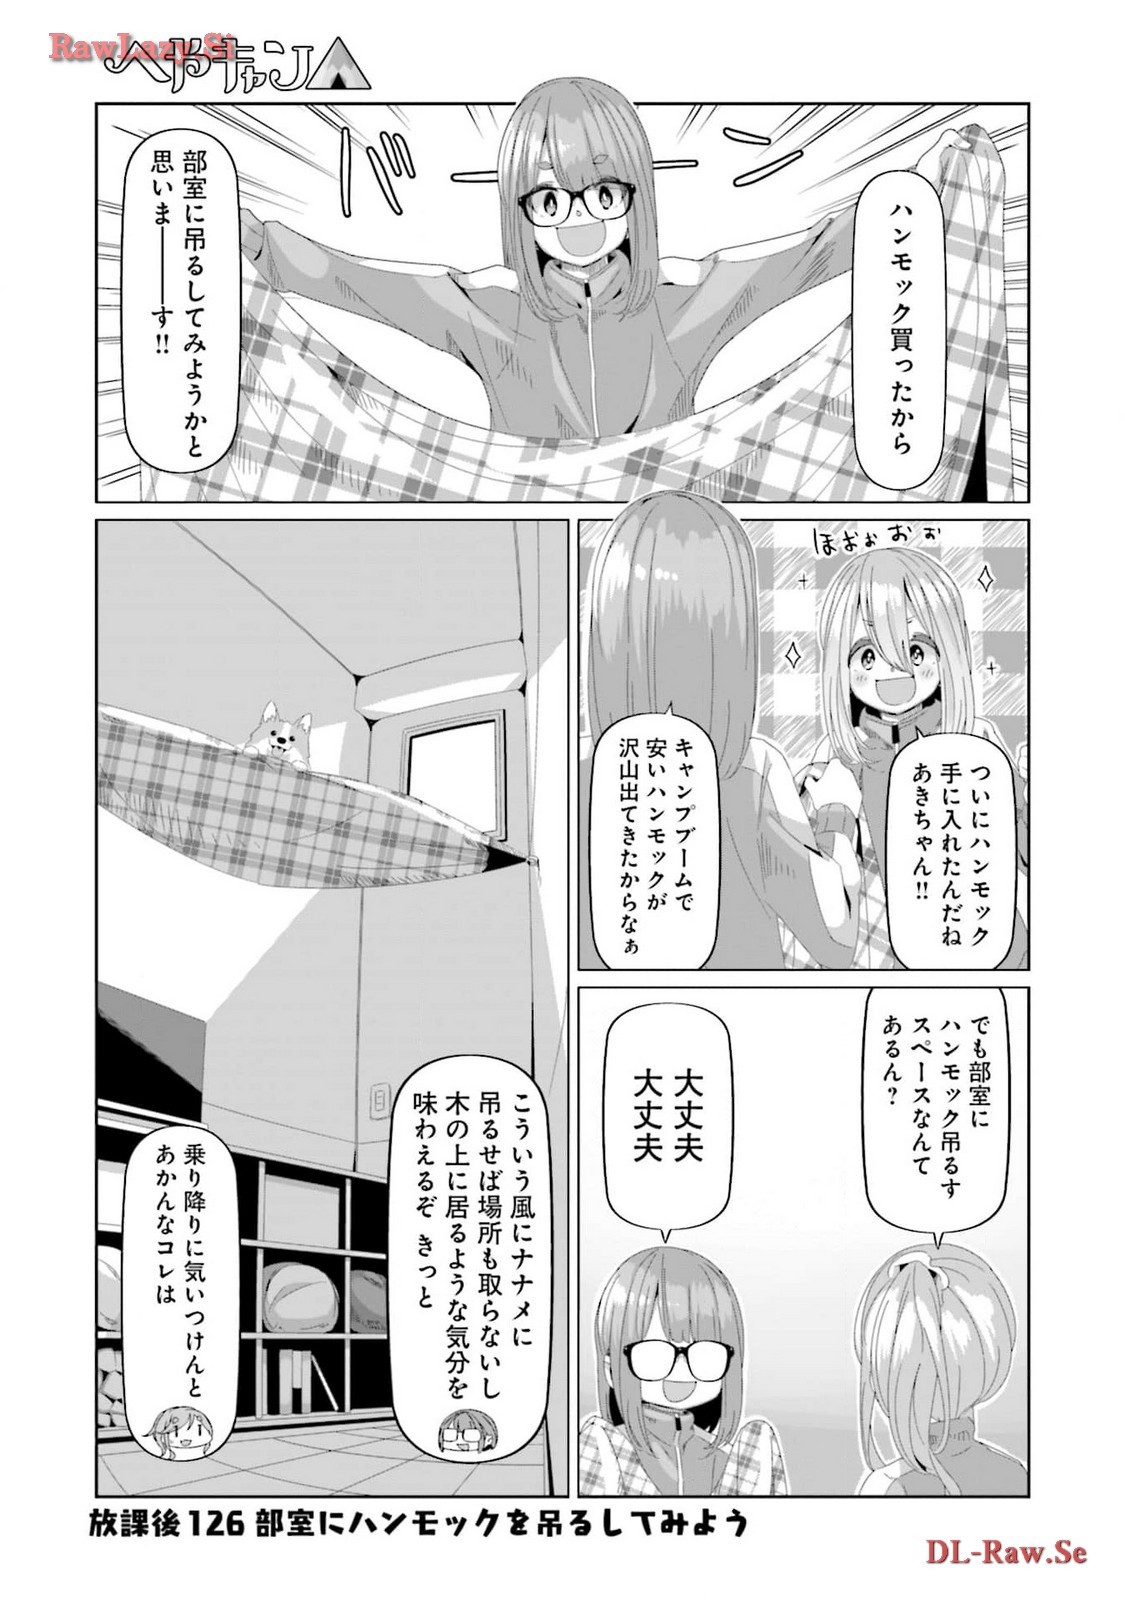 Yuru Camp - Chapter 95.5 - Page 1